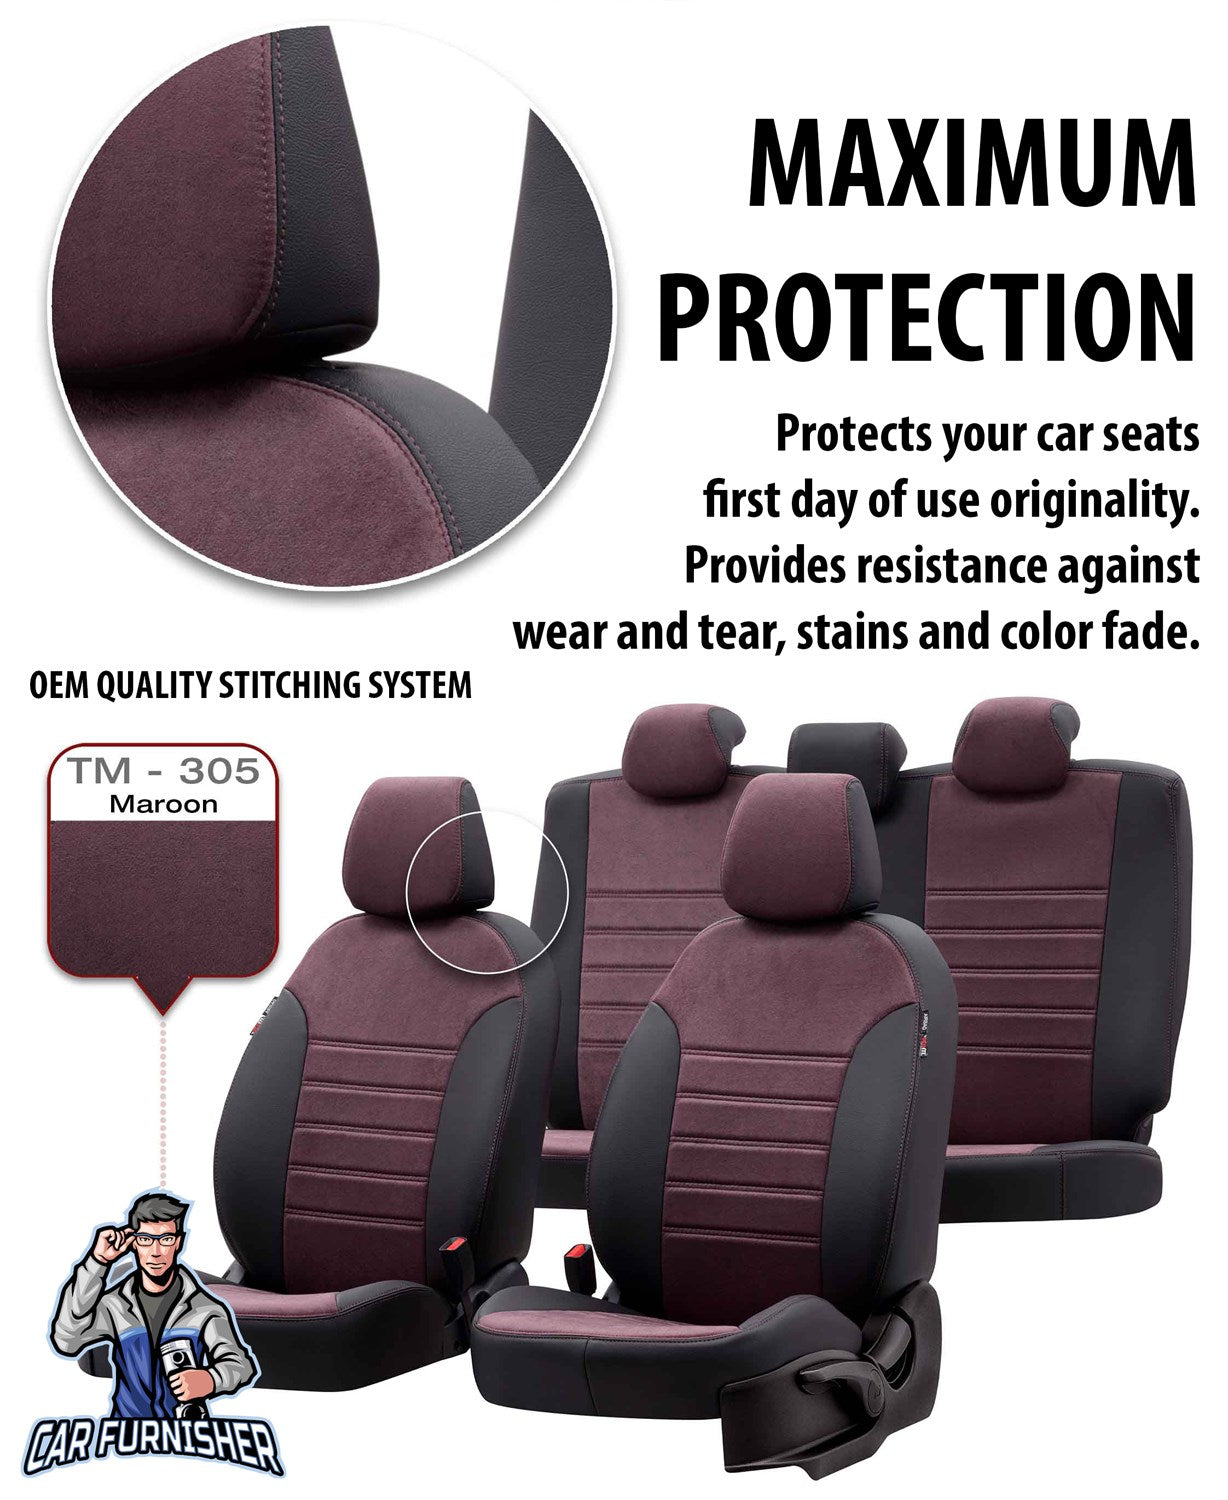 Daihatsu Terios Seat Covers Milano Suede Design Beige Leather & Suede Fabric